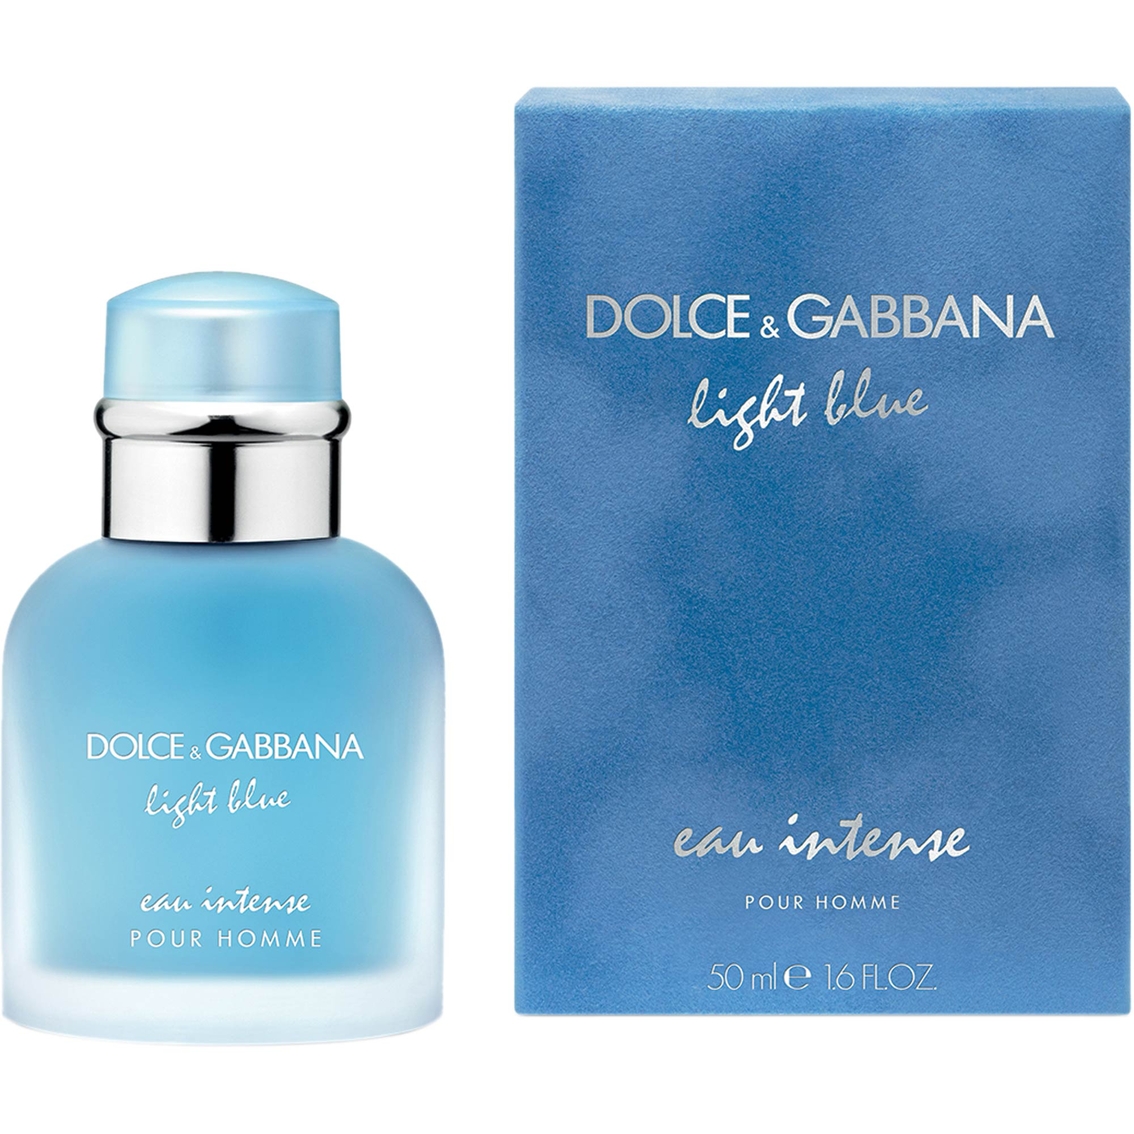 Купить Парфюмерная вода Dolce & Gabbana, Dolce & Gabbana Light Blue Eau Intense Pour Homme 50ml, Италия